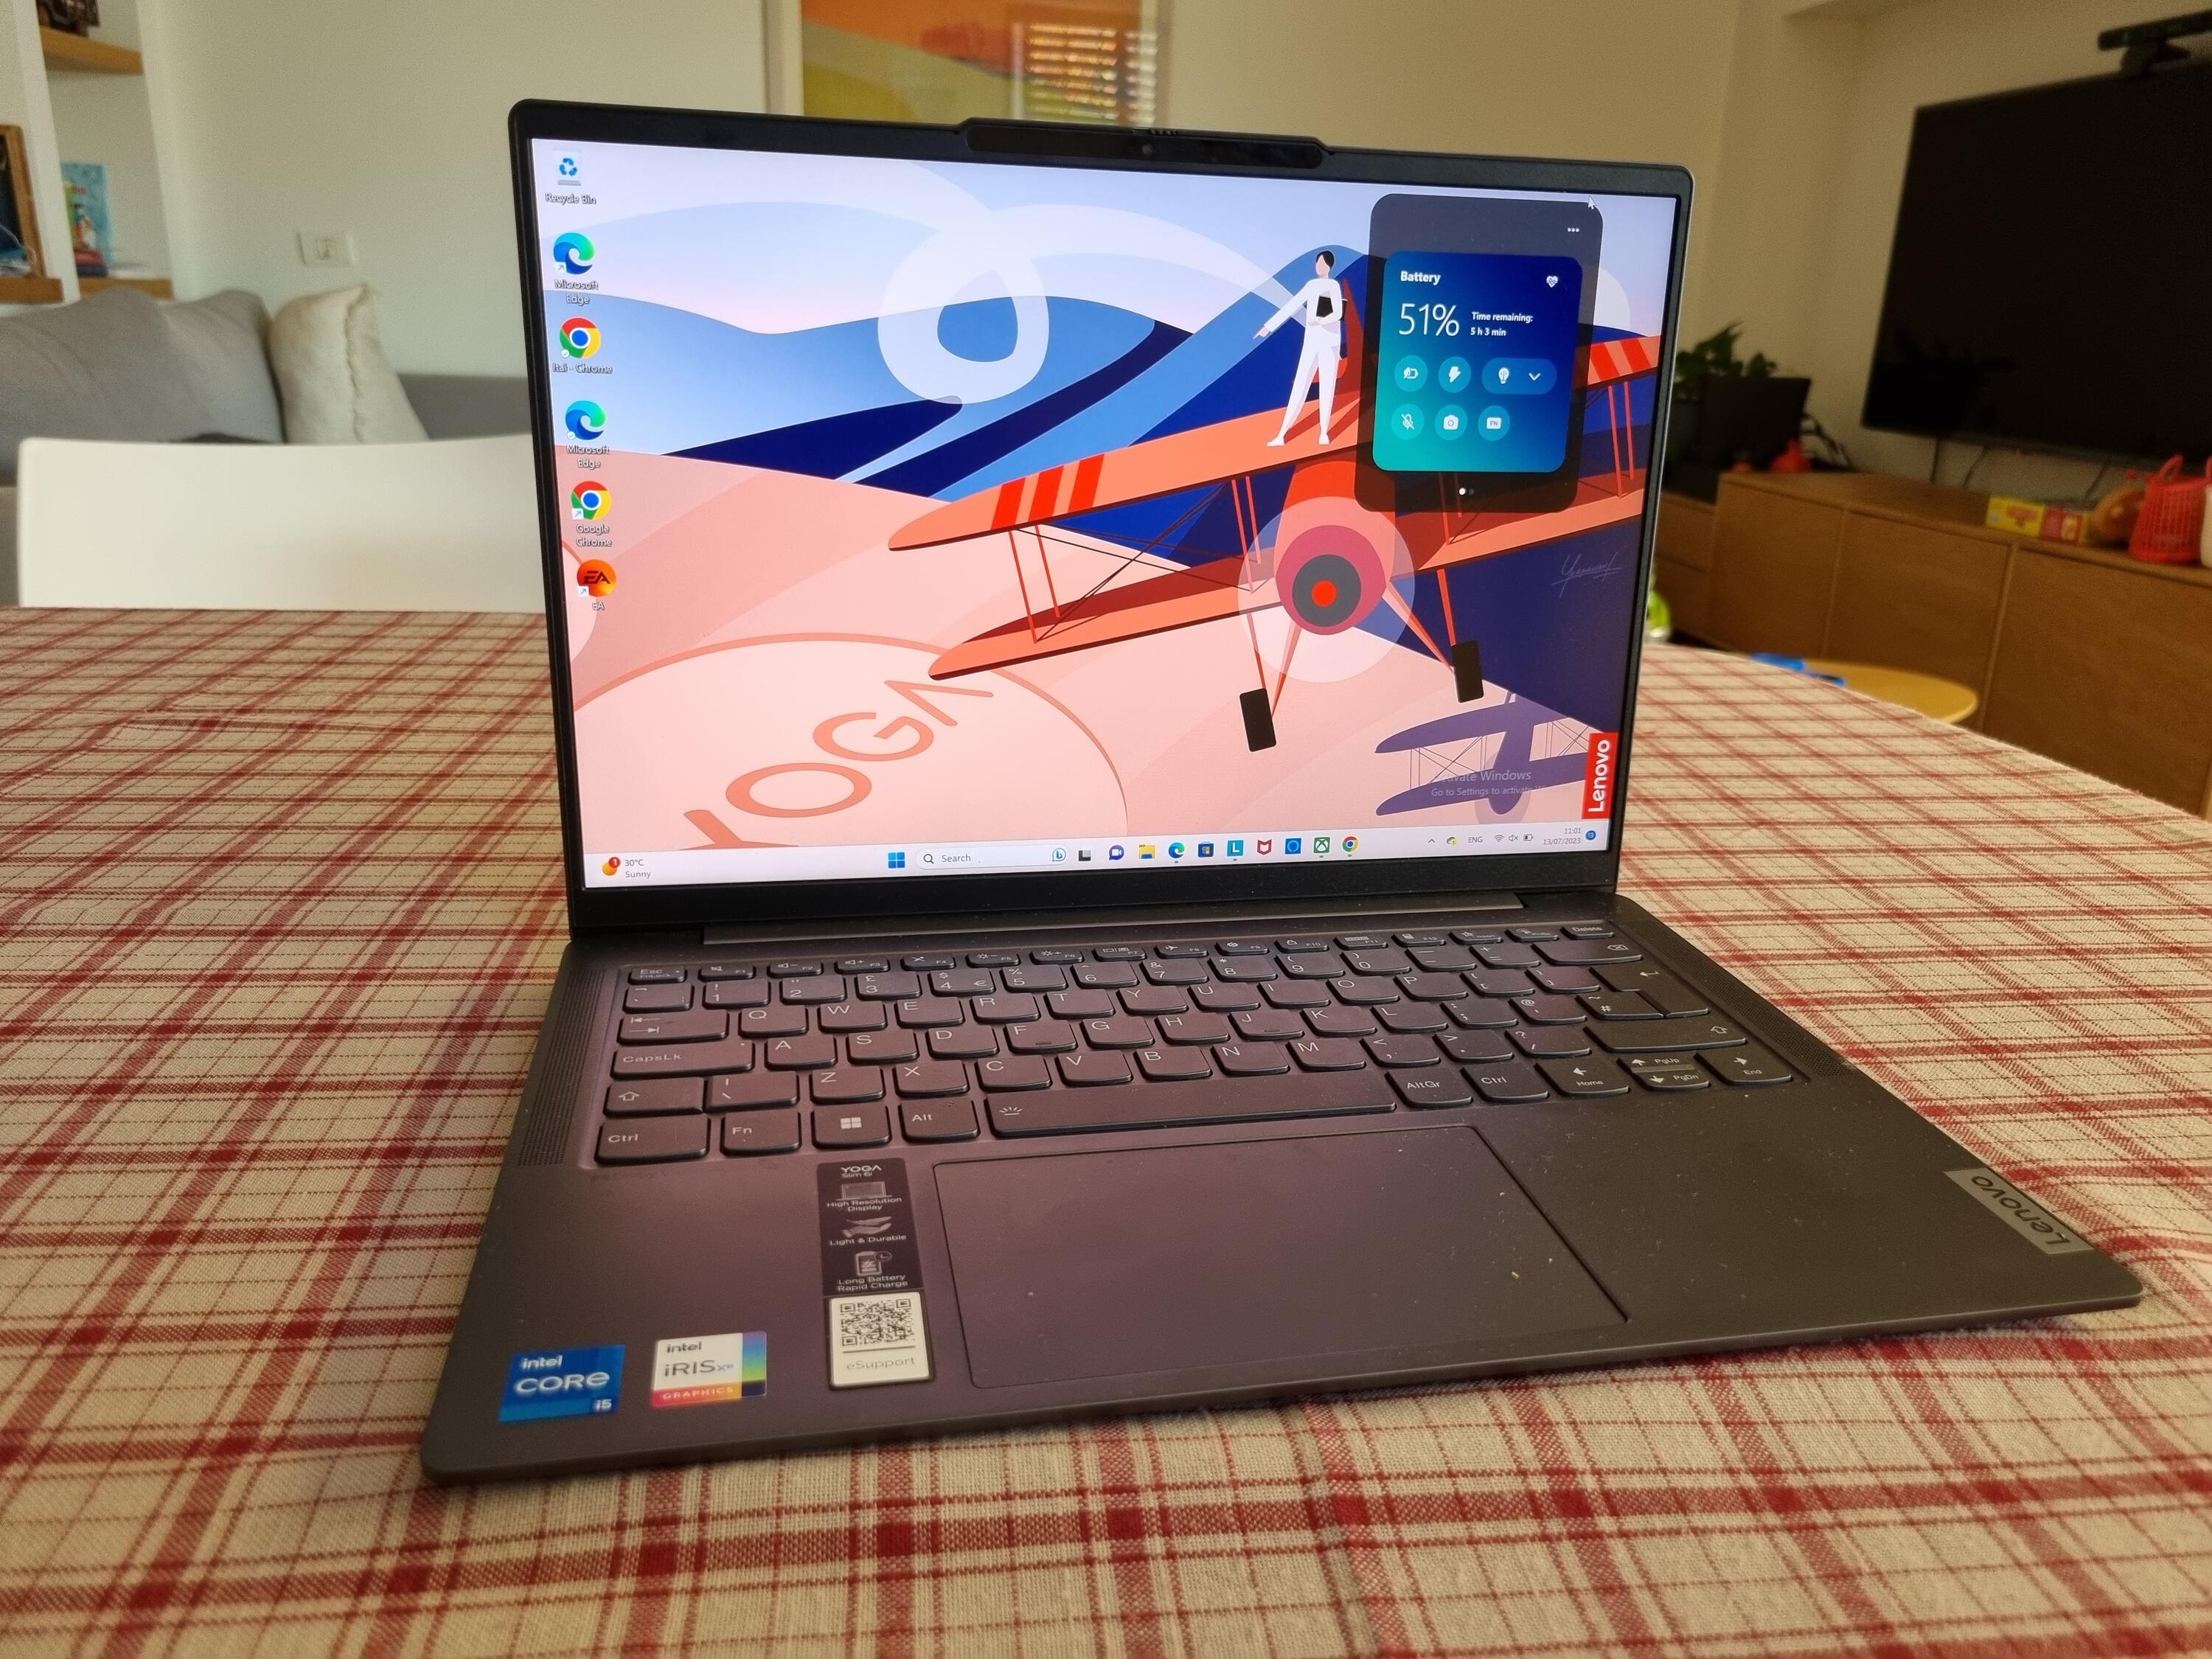 Lenovo yoga slim 7 review: A budget-friendly laptop with premium